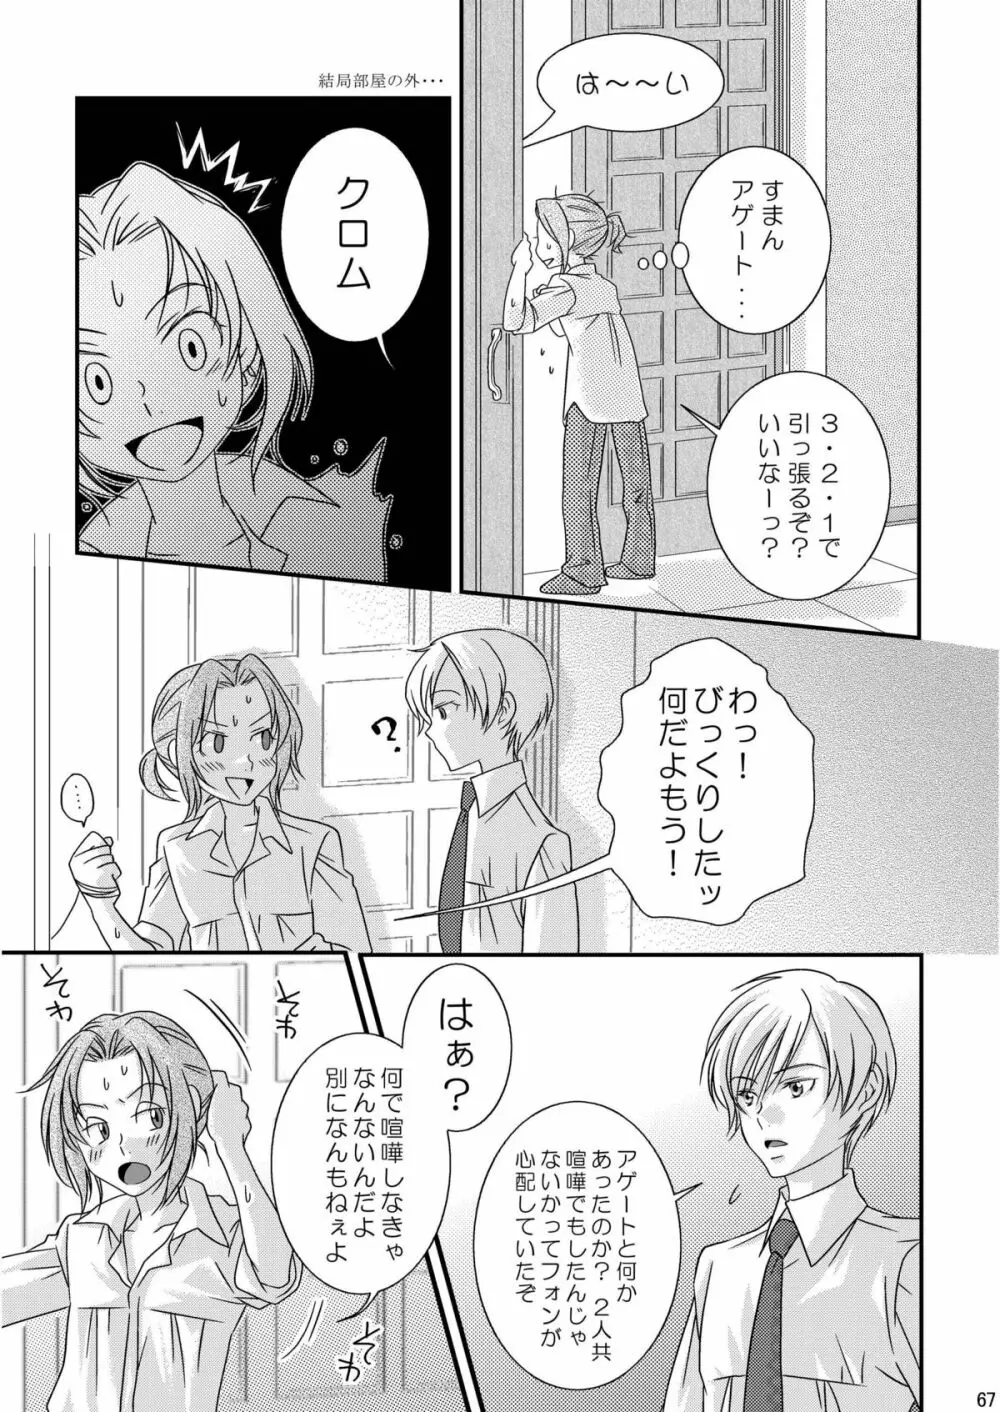 Re: ぷれい2 - page67